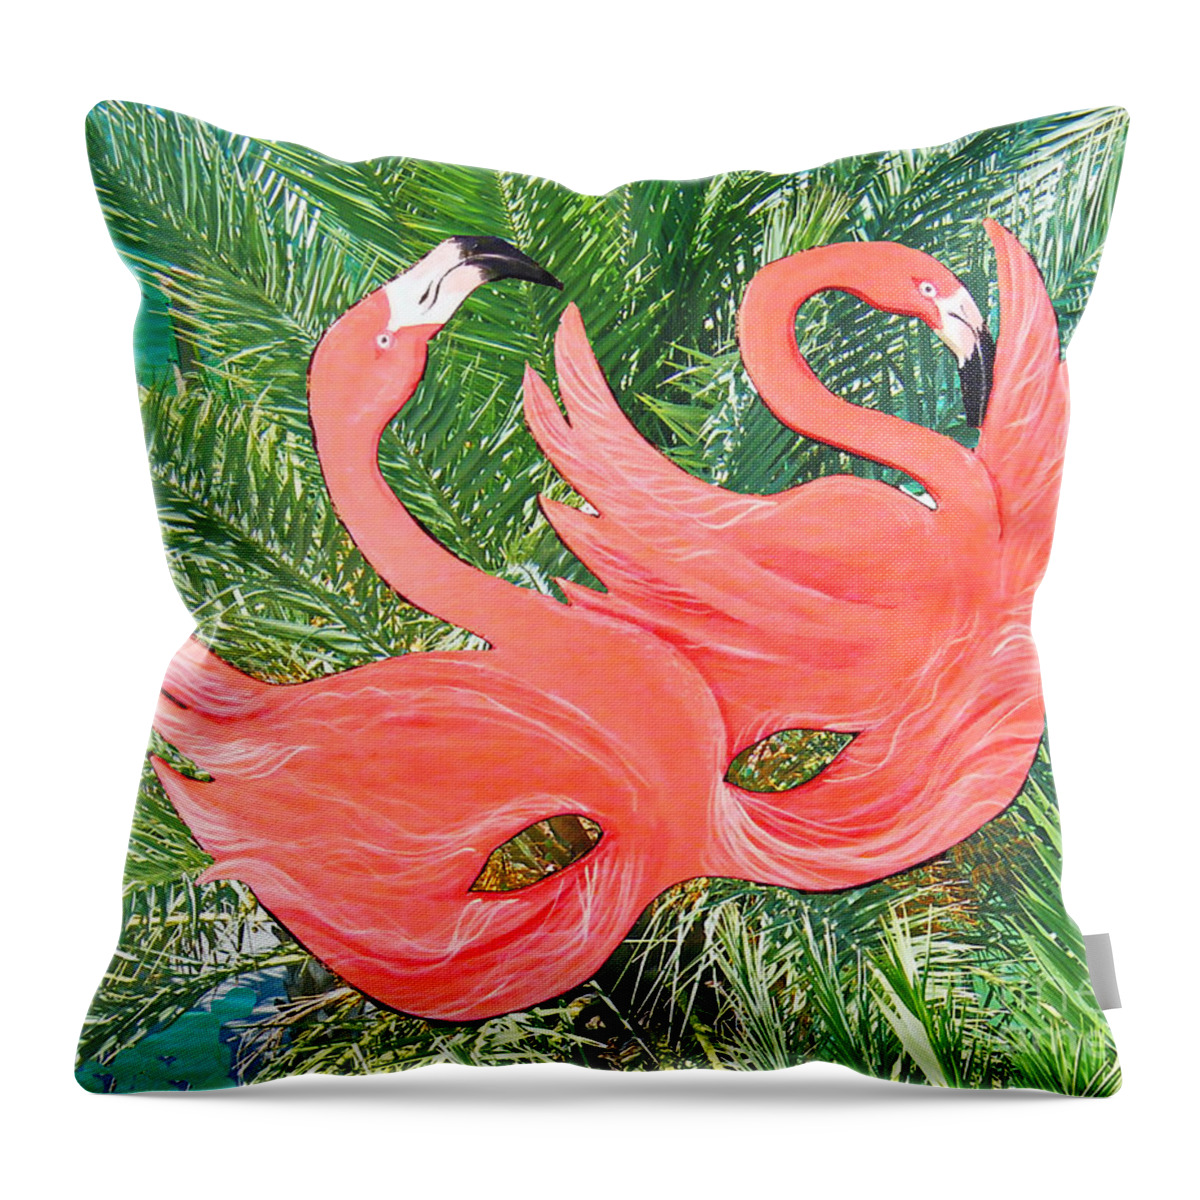 Flamingos Throw Pillow featuring the mixed media Flamingo mask 1 by Lizi Beard-Ward